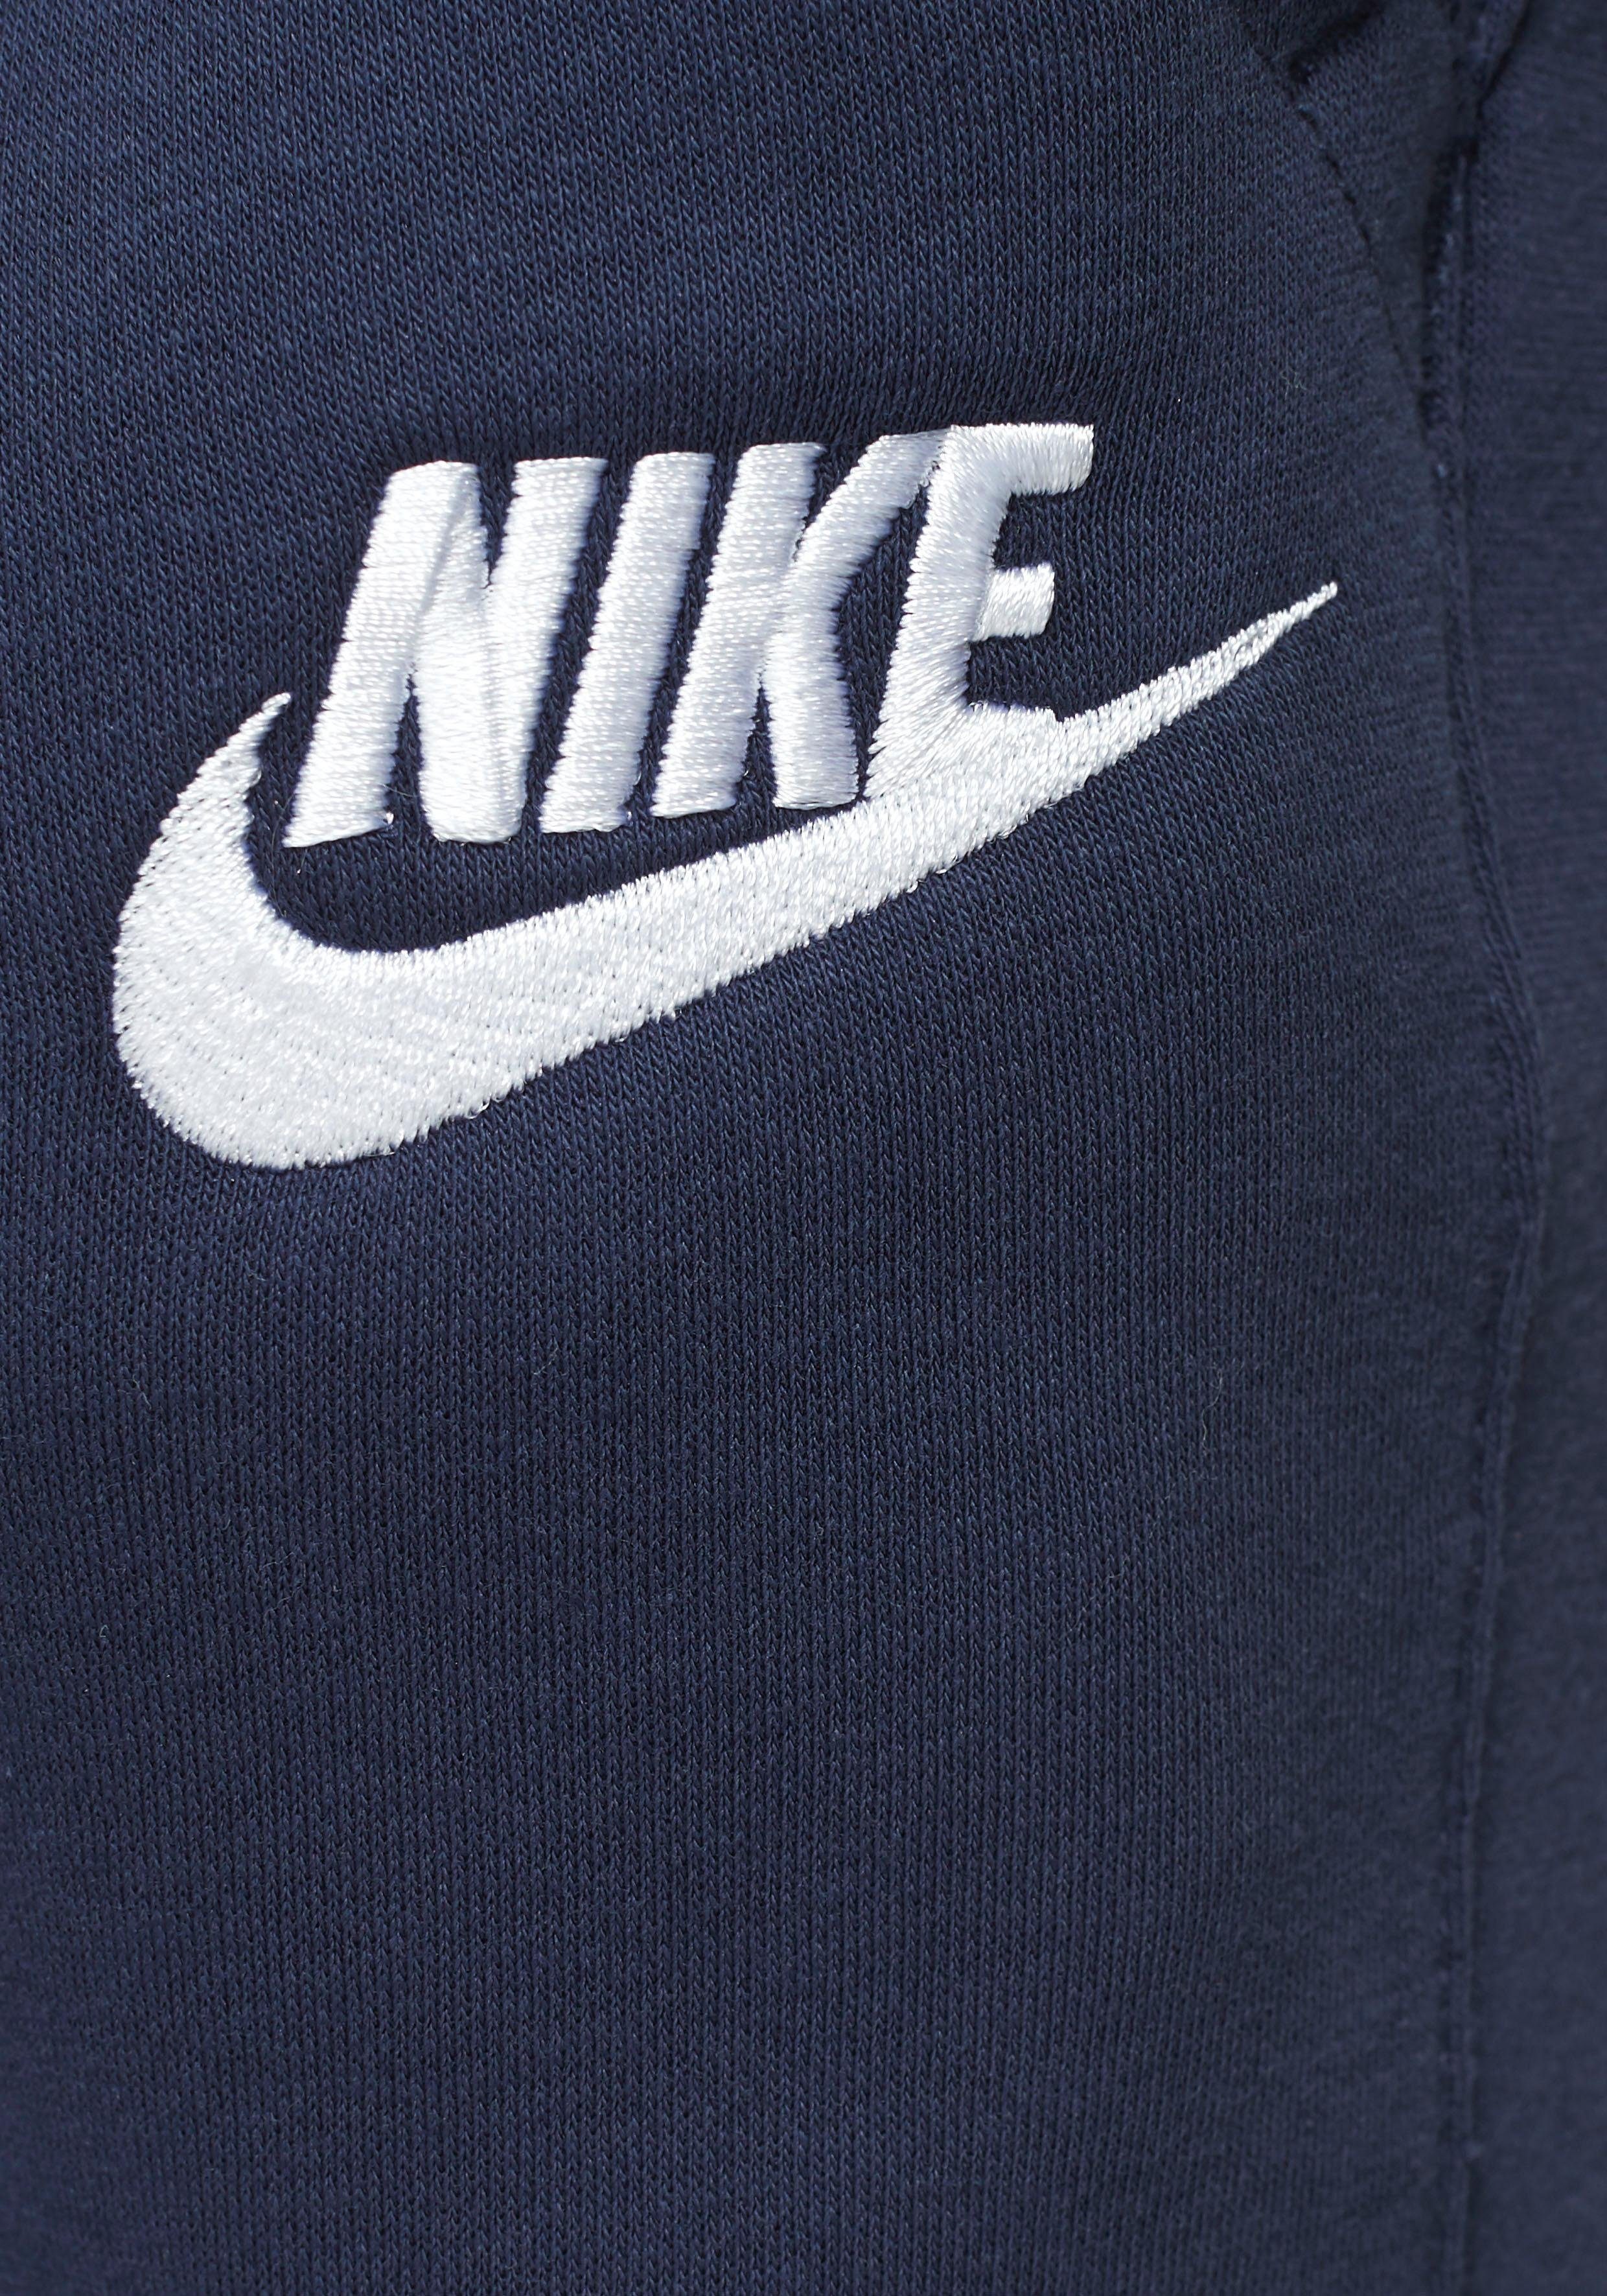 CLUB Jogginghose JOGGER Sportswear Nike dunkelblau B FLEECE PANT NSW